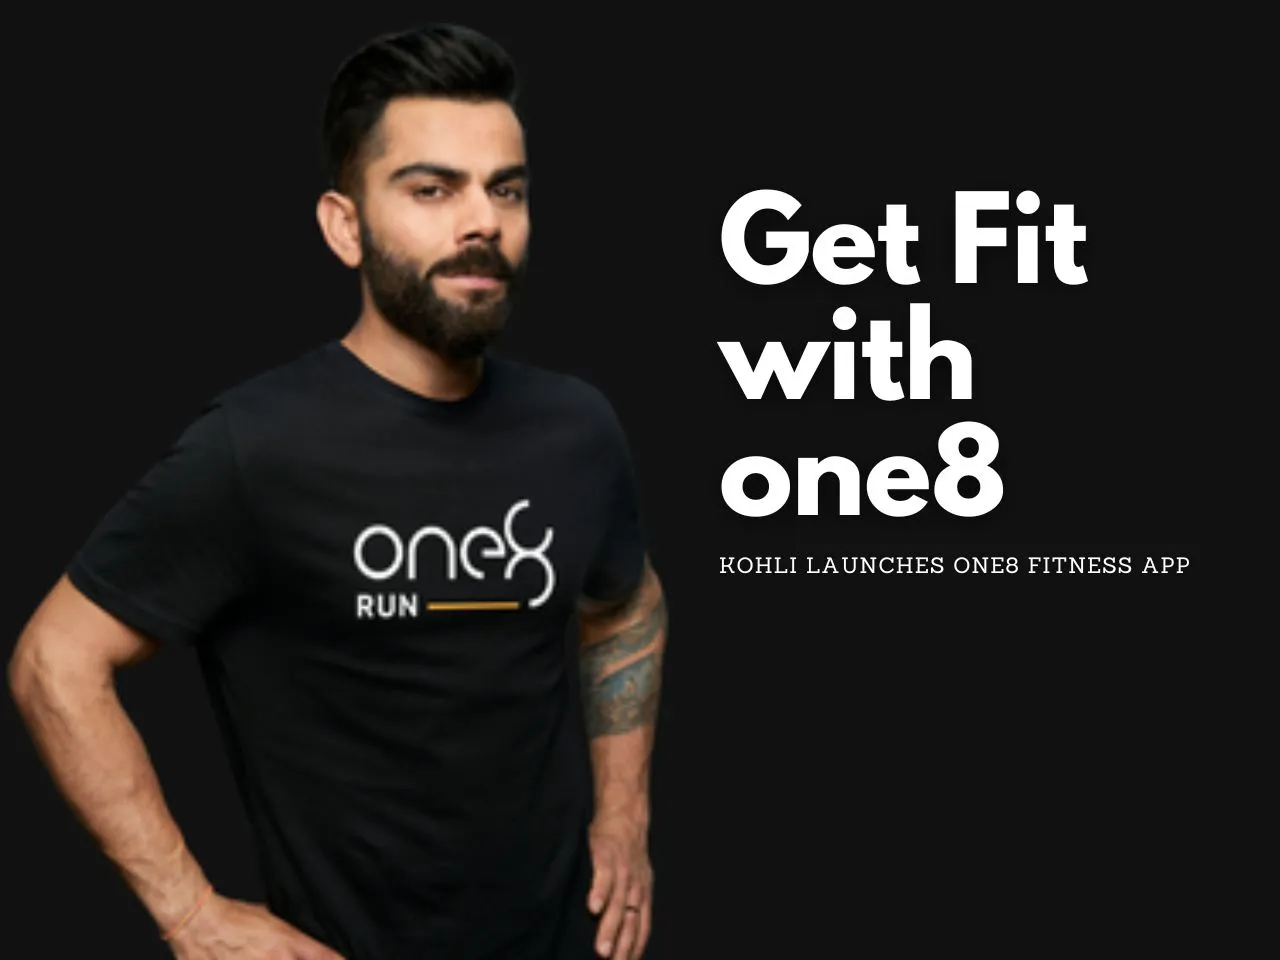 Kohli Launches one8 Fitness App: Revolutionizing Personalized Fitness